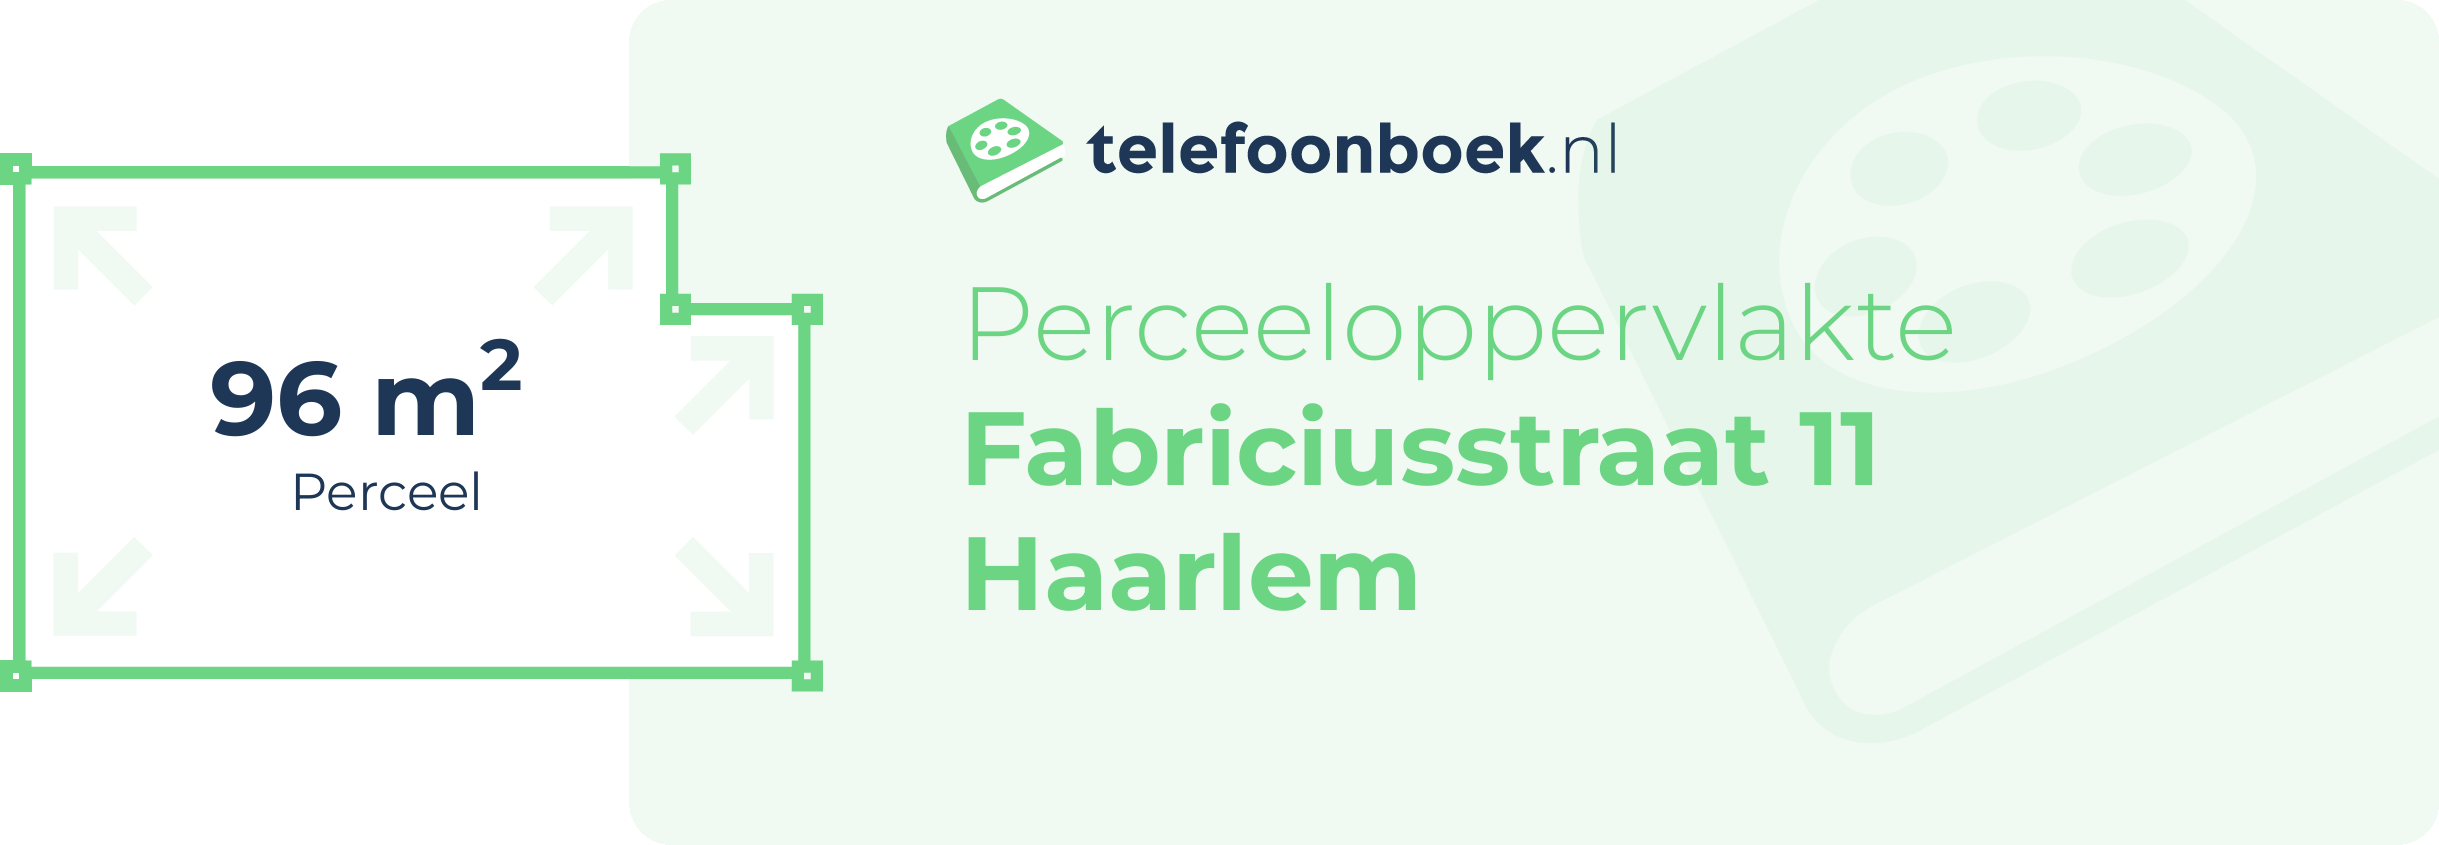 Perceeloppervlakte Fabriciusstraat 11 Haarlem